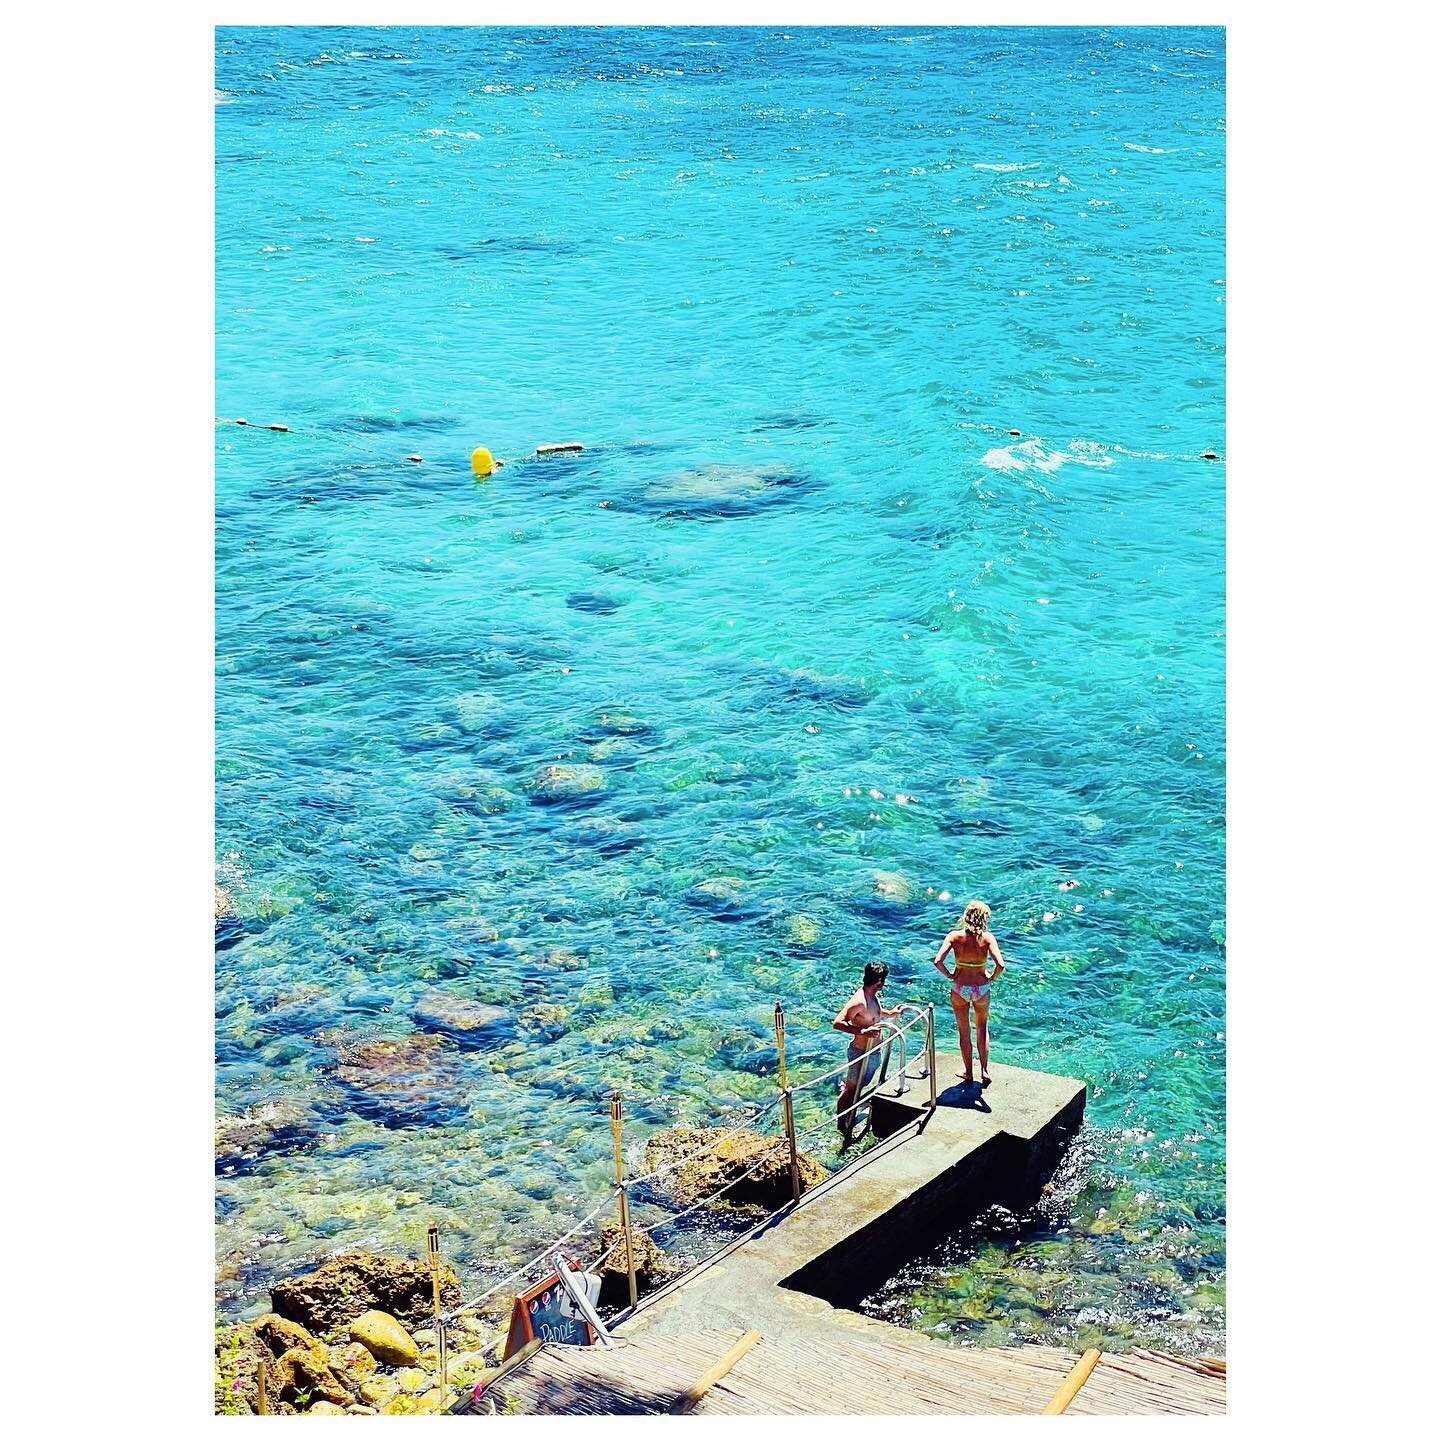 J&rsquo;Y VAIS OU J&rsquo;Y VAIS PAS 
.
.
.
#swimming_time #concrete #laddertothemoon #bluelagoon #peoplephotography #summervibes #summerlife #ladder #shadesofblue #shadesofmagic #mediterraneansea #mediterraneanlife #sealovers #seaview #swimmer #medi